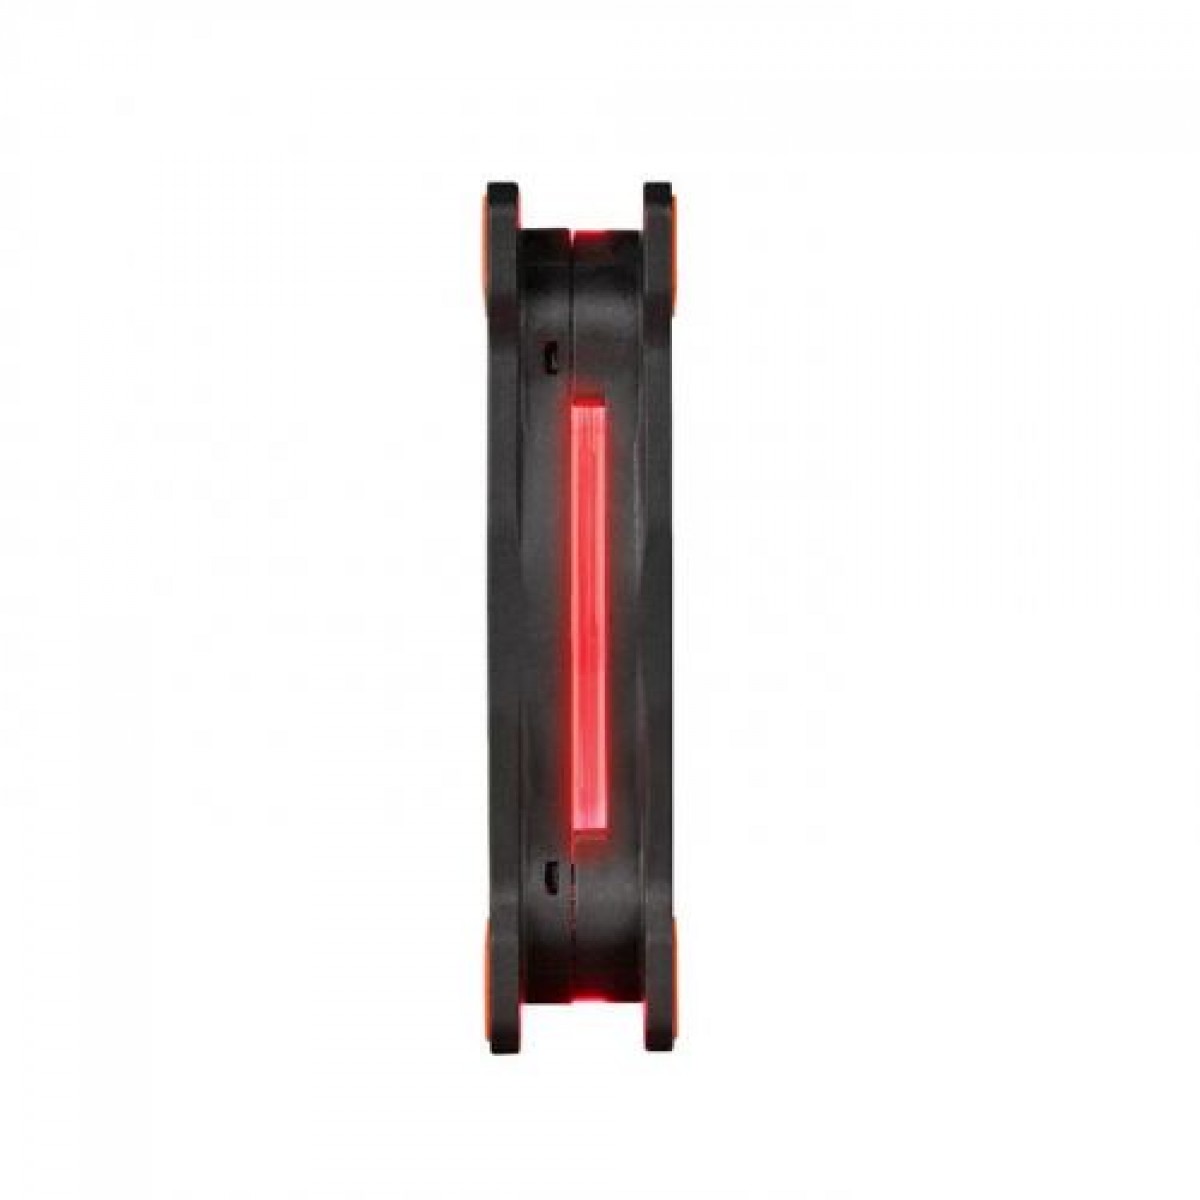 Cooler Para Gabinete Thermaltake Riing 14 LED Red CL-F039-PL14RE-A